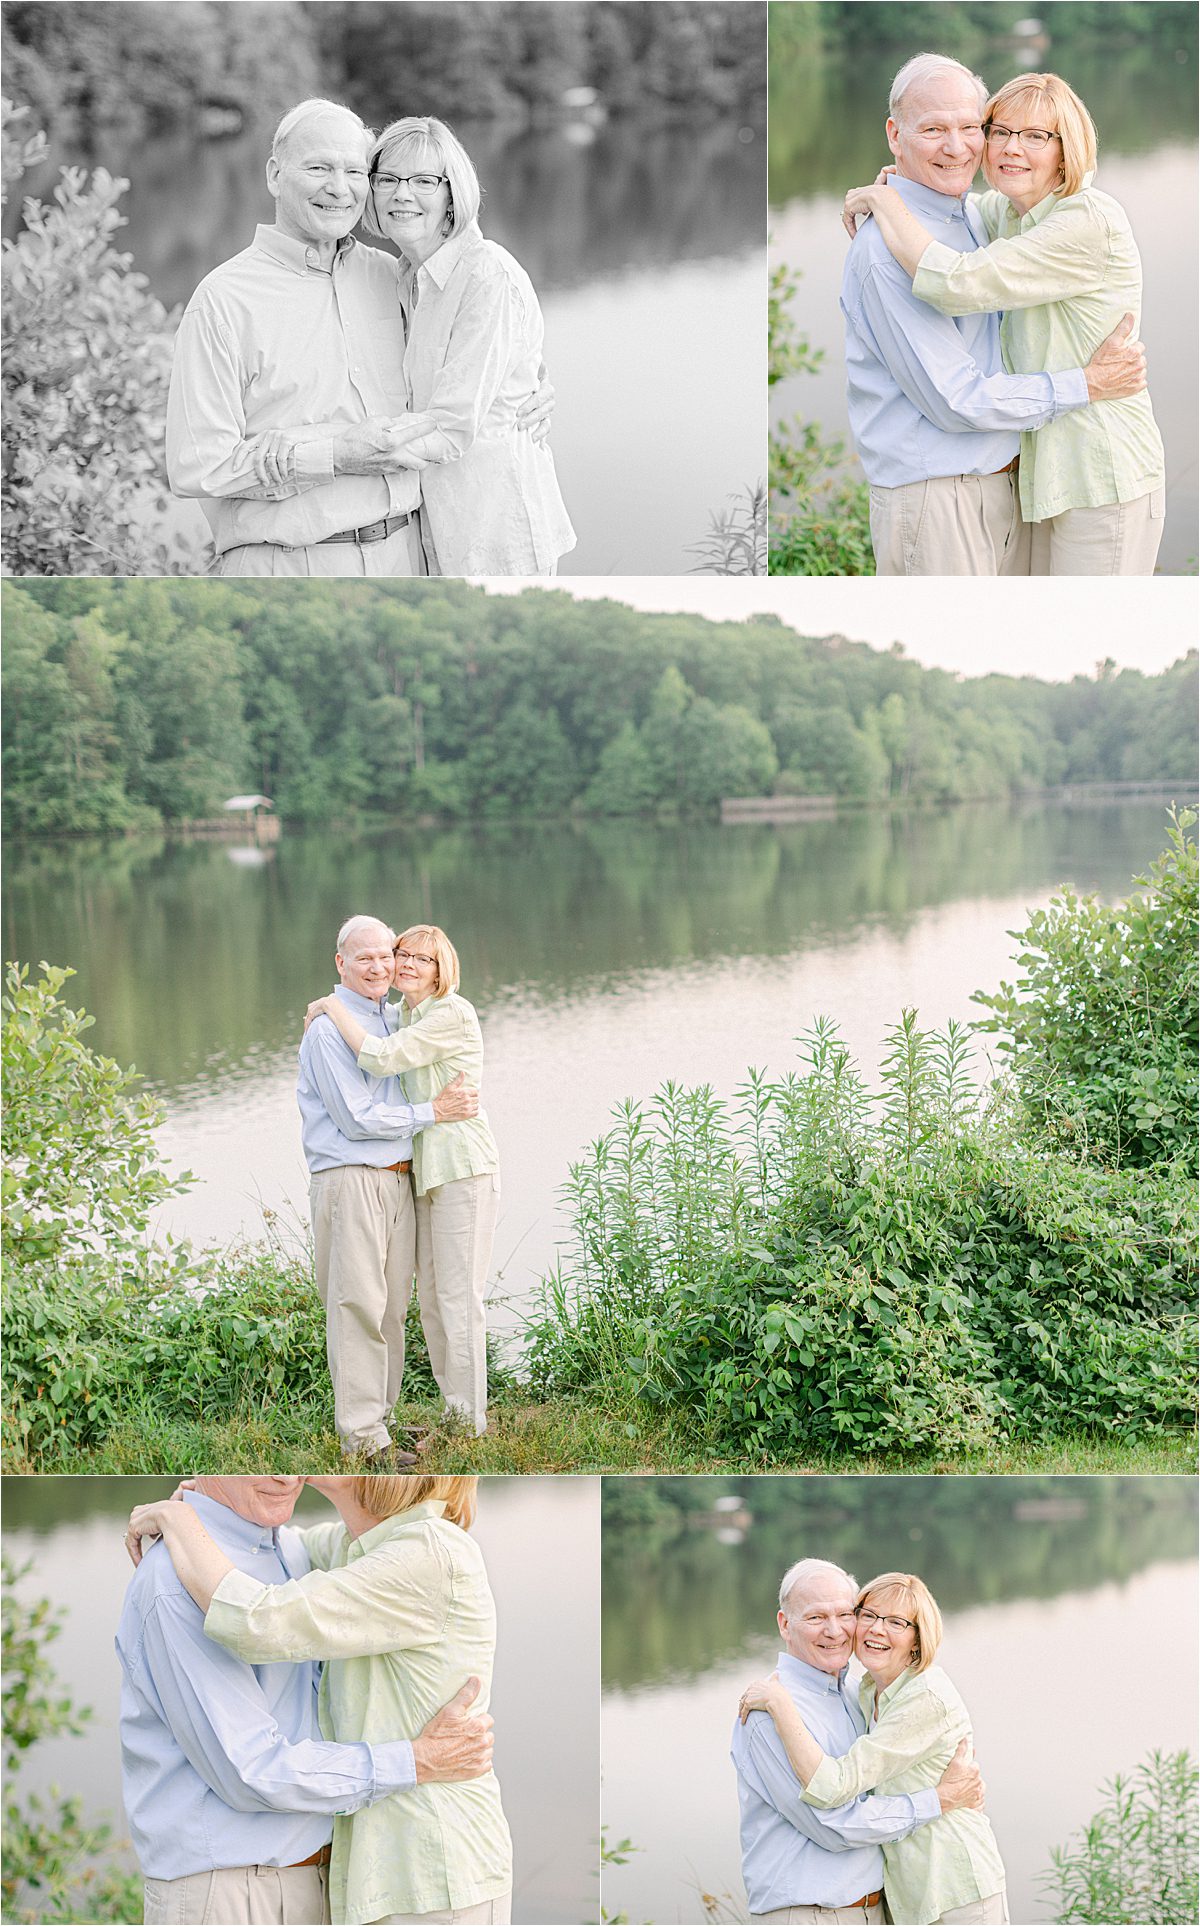 50th wedding anniversary portraits in Athens, GA